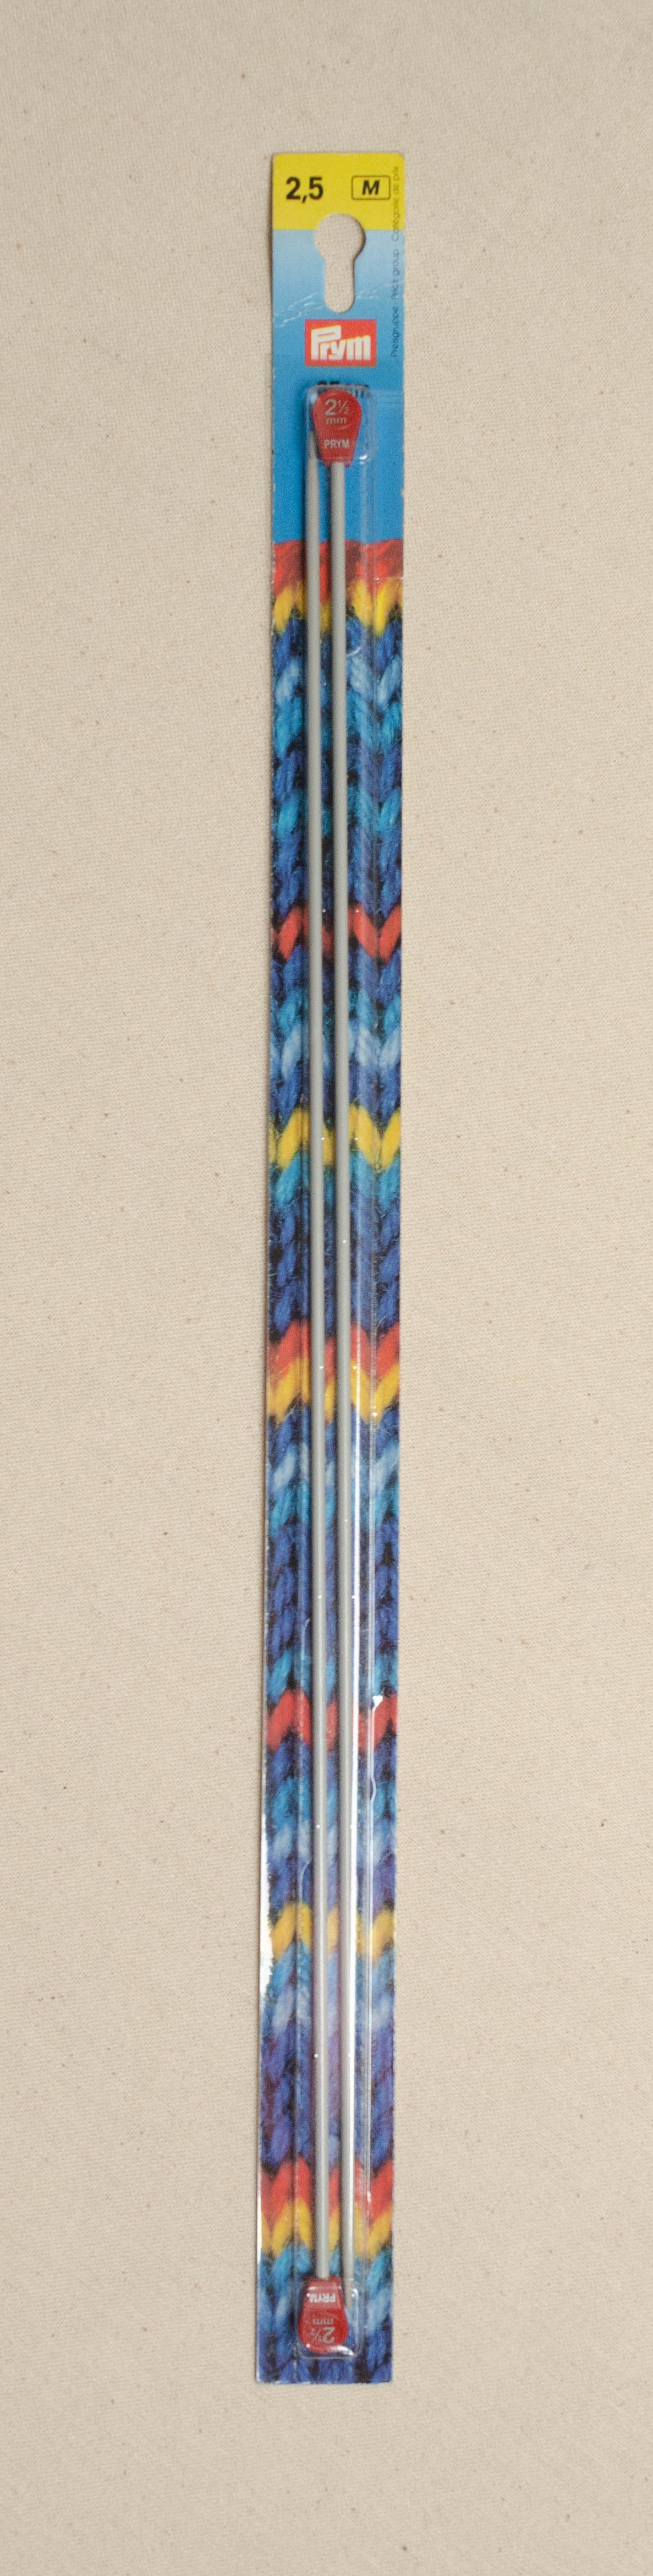 Prym 35cm Knitting Needles - 35cm X 2.5mm